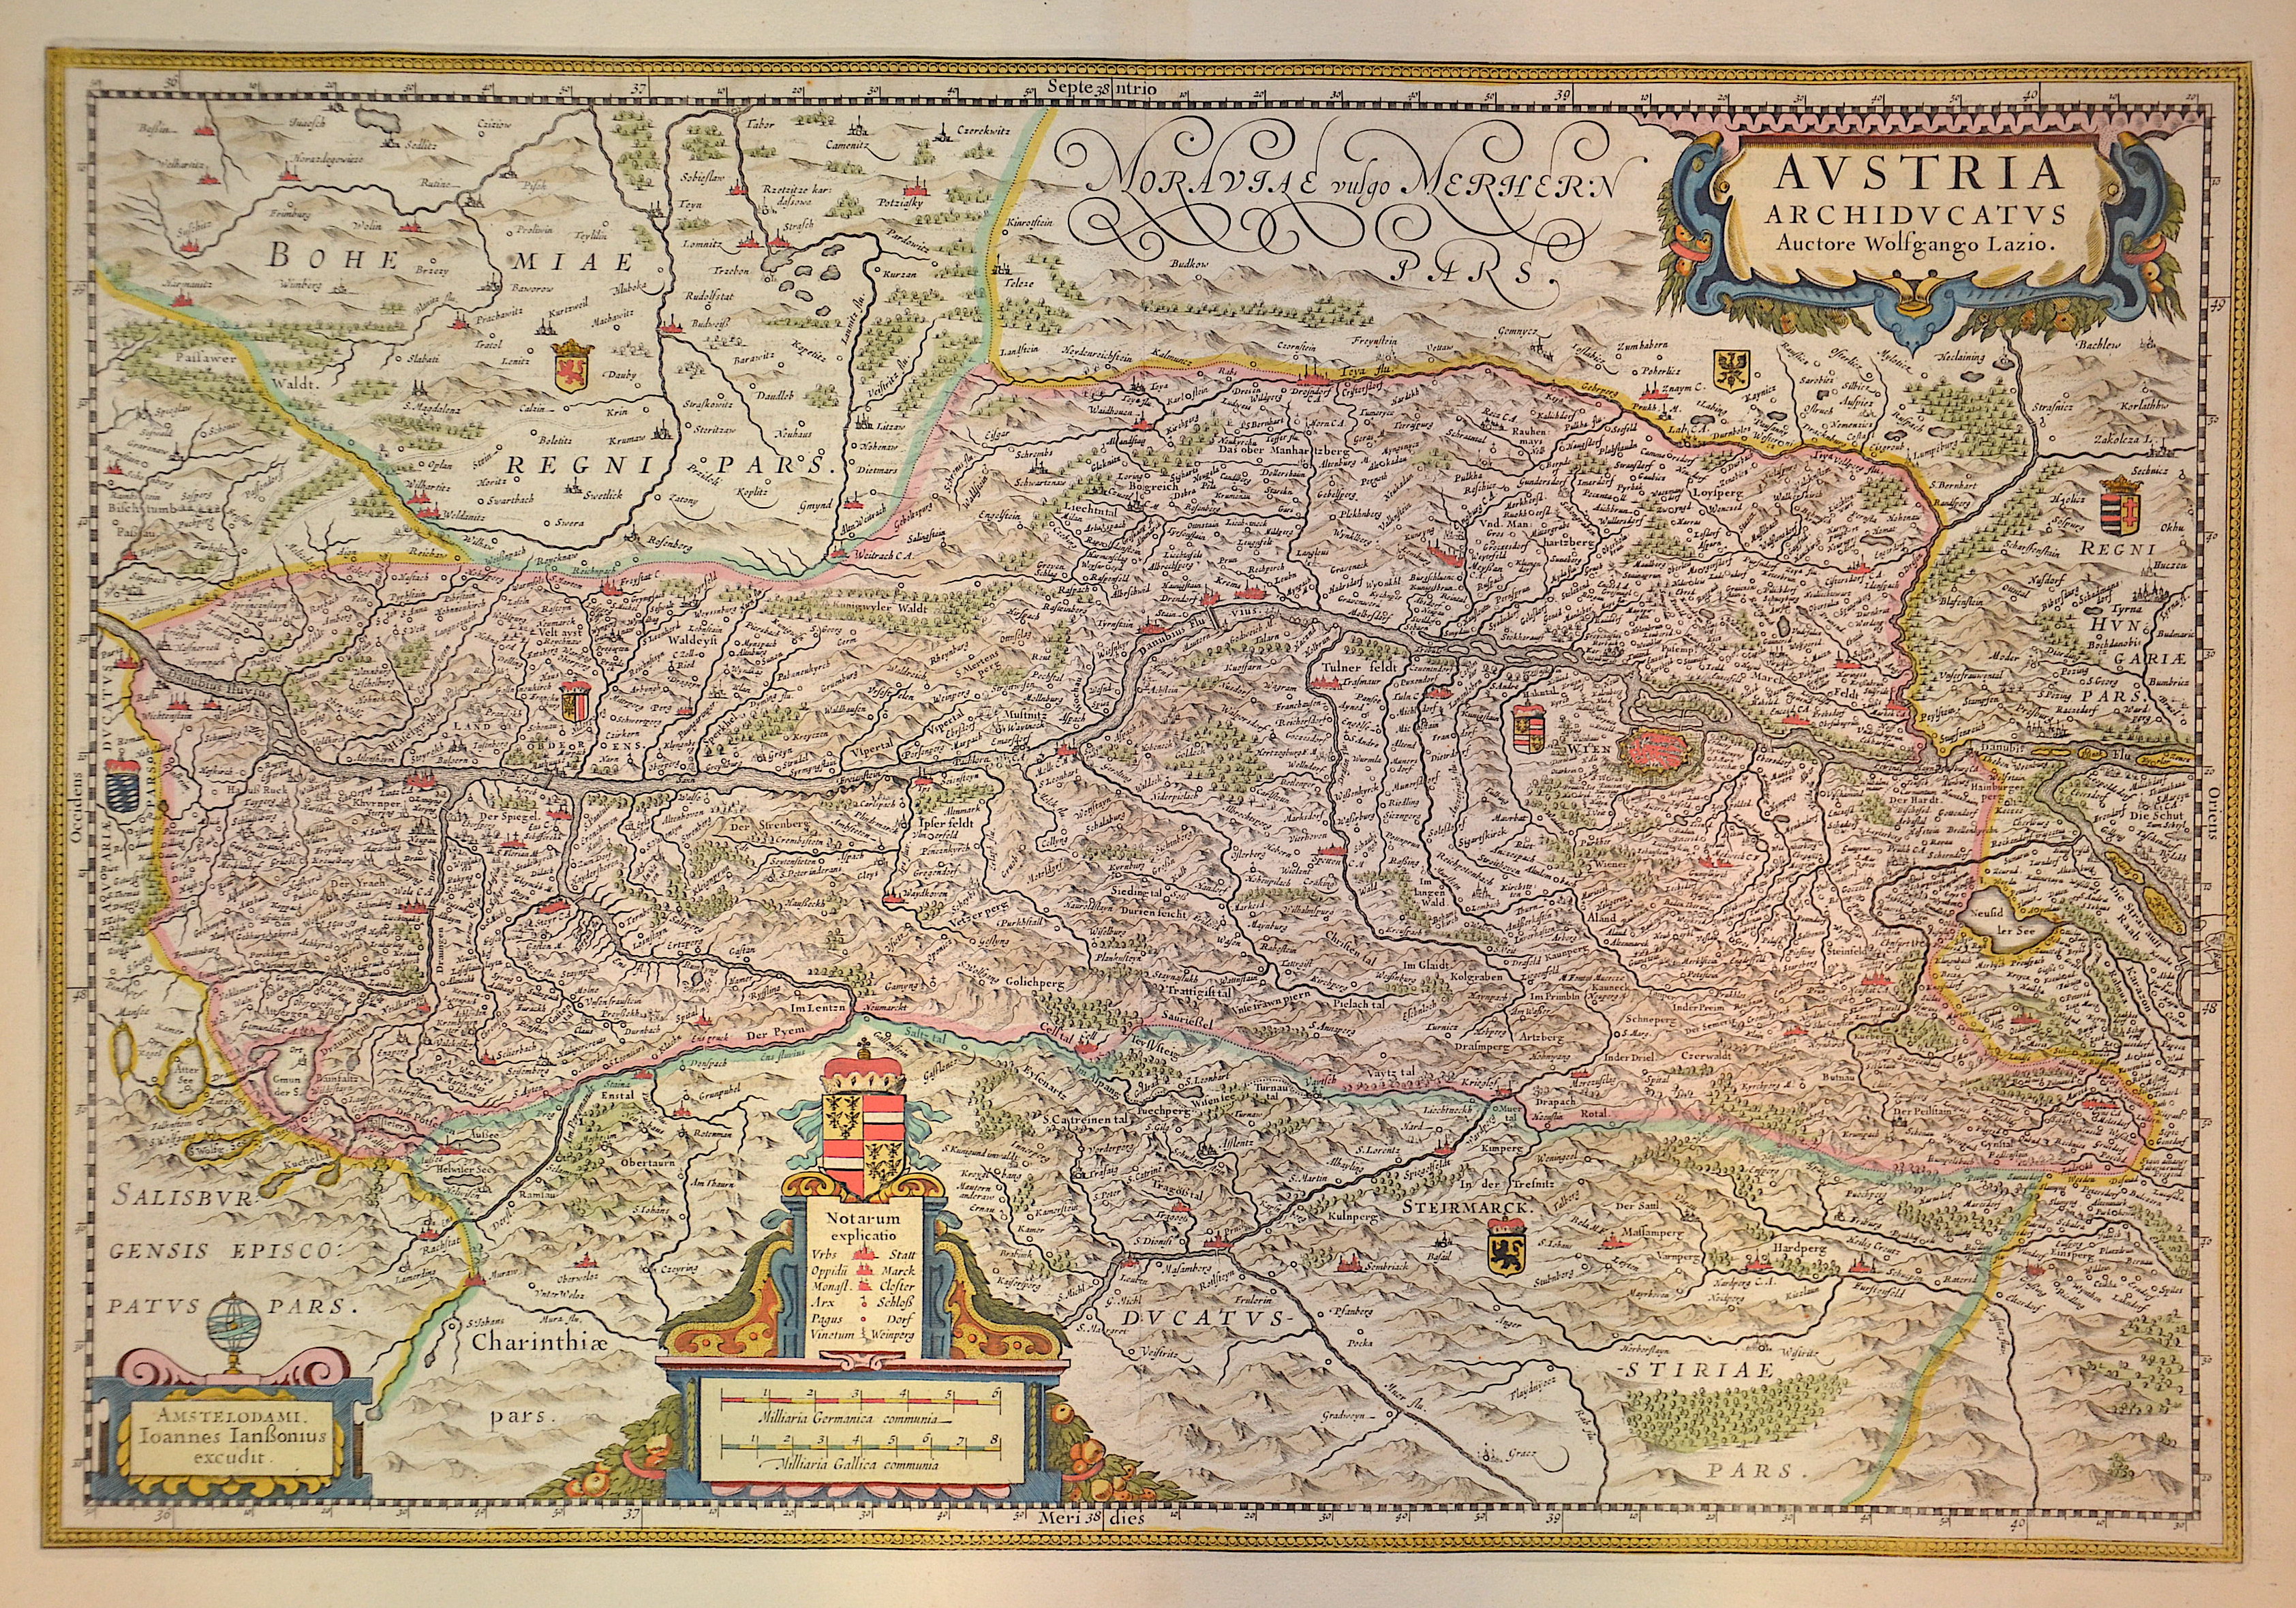 Janssonius/Mercator-Hondius, H. Johann Austria archiducatus